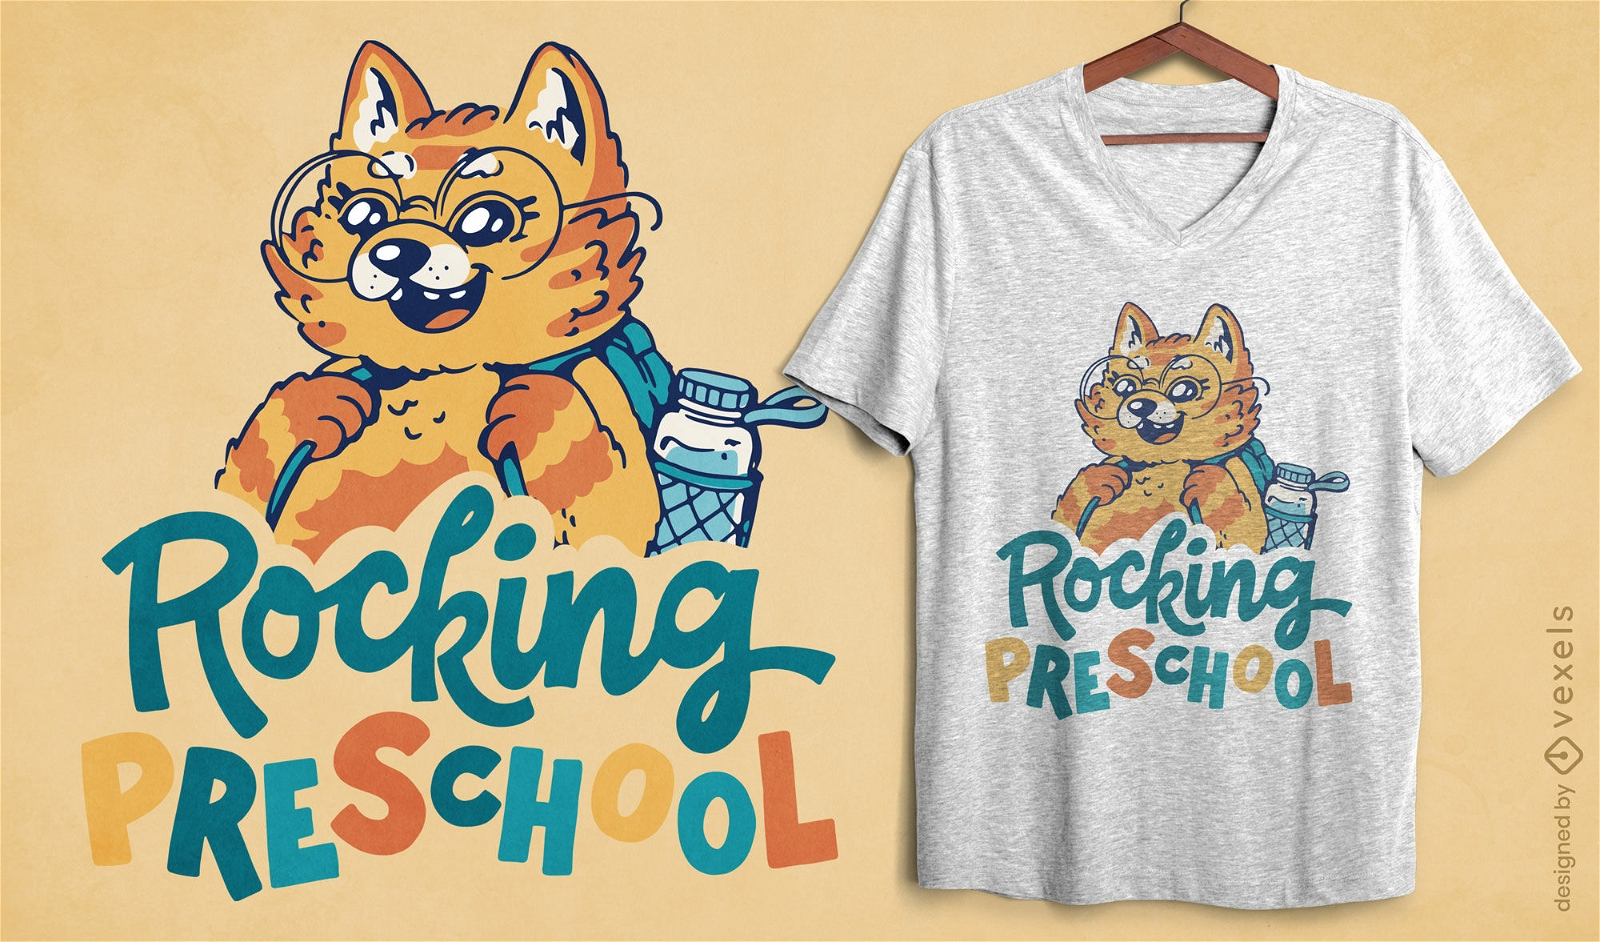 Rocking preschool cat t-shirt design